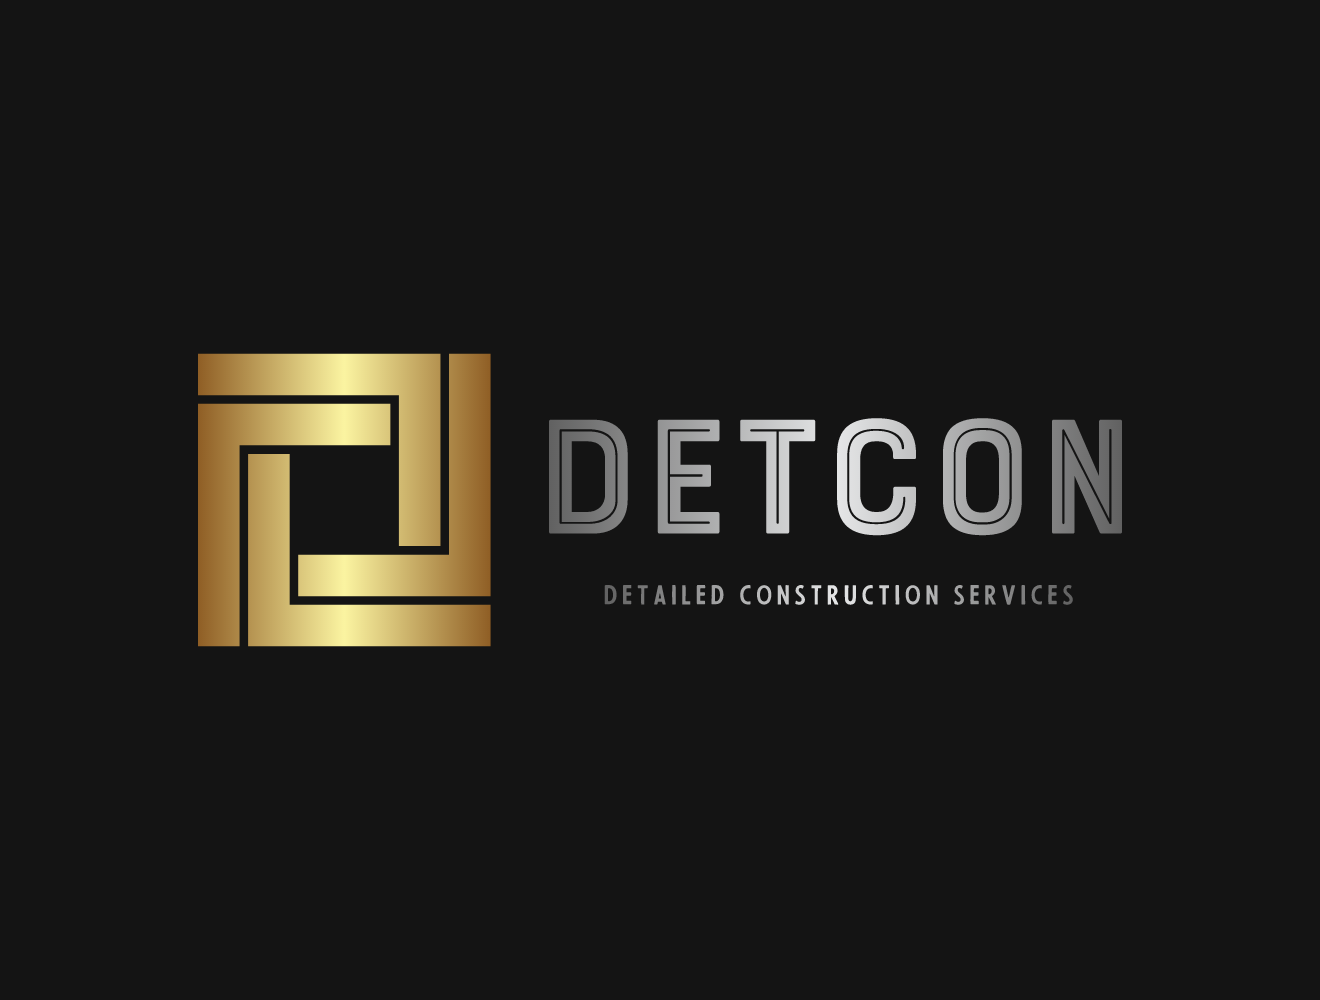 DetCon Services LLC Logo